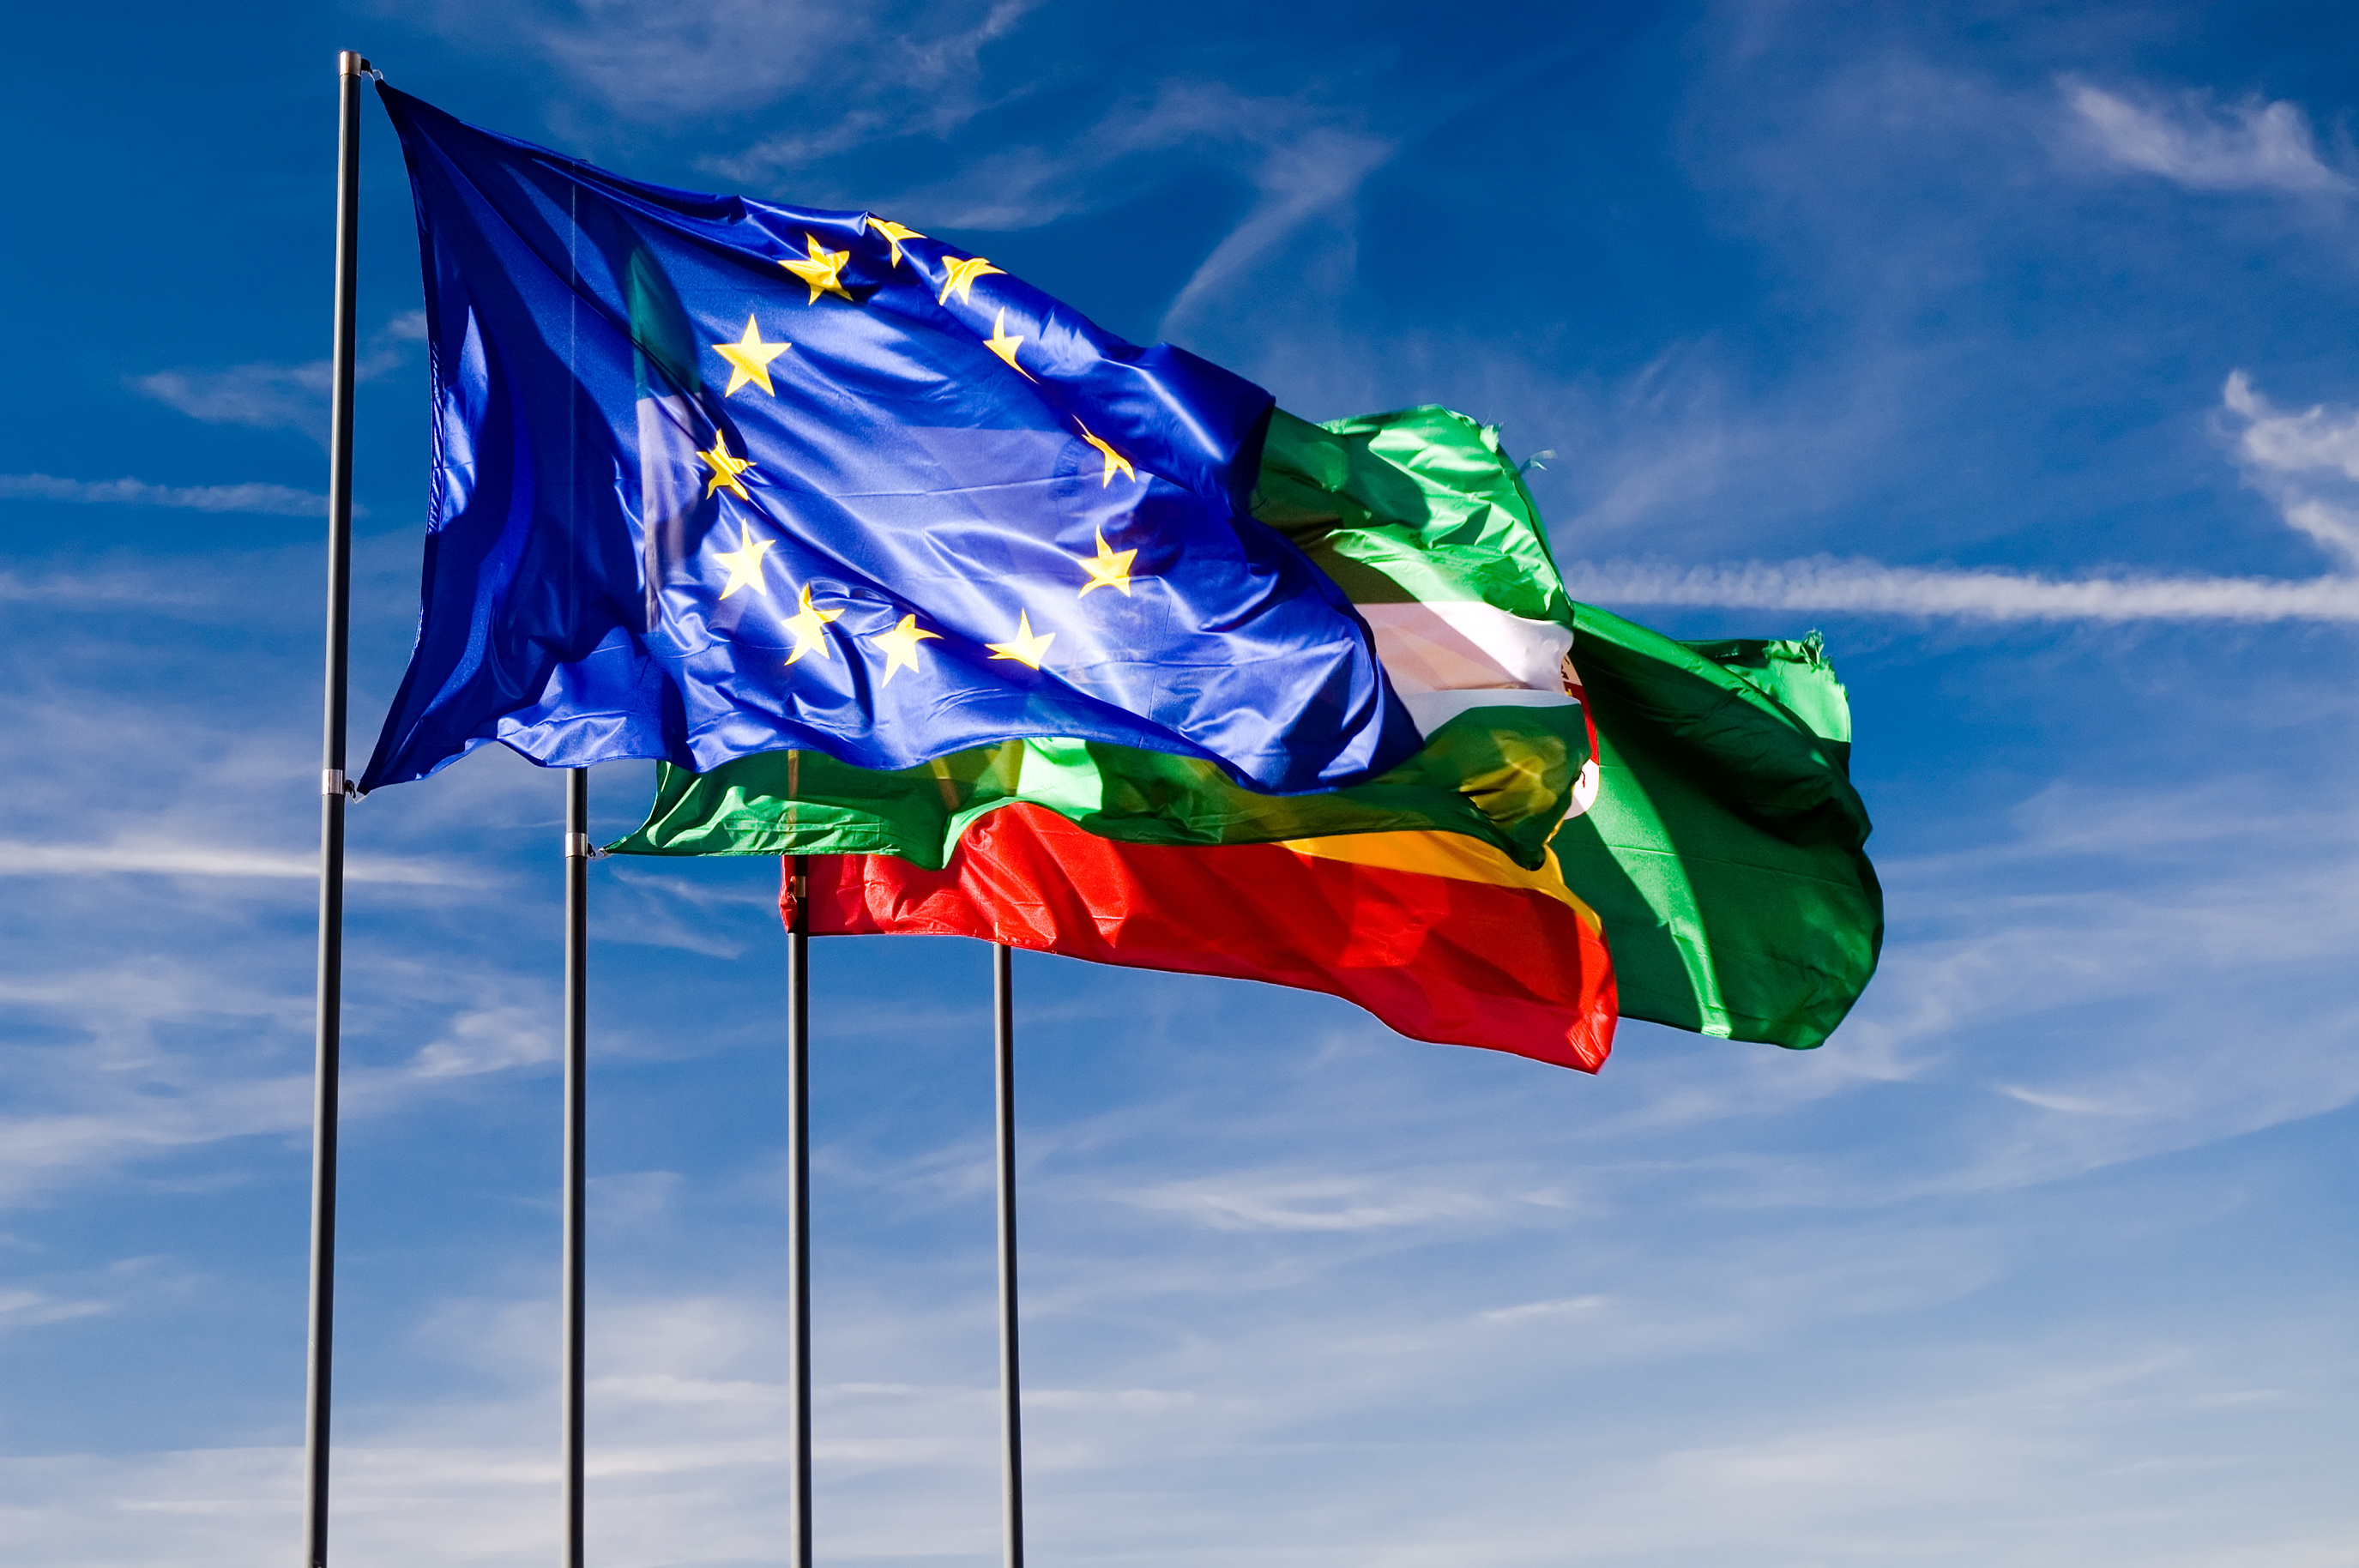 European flag against blue sky